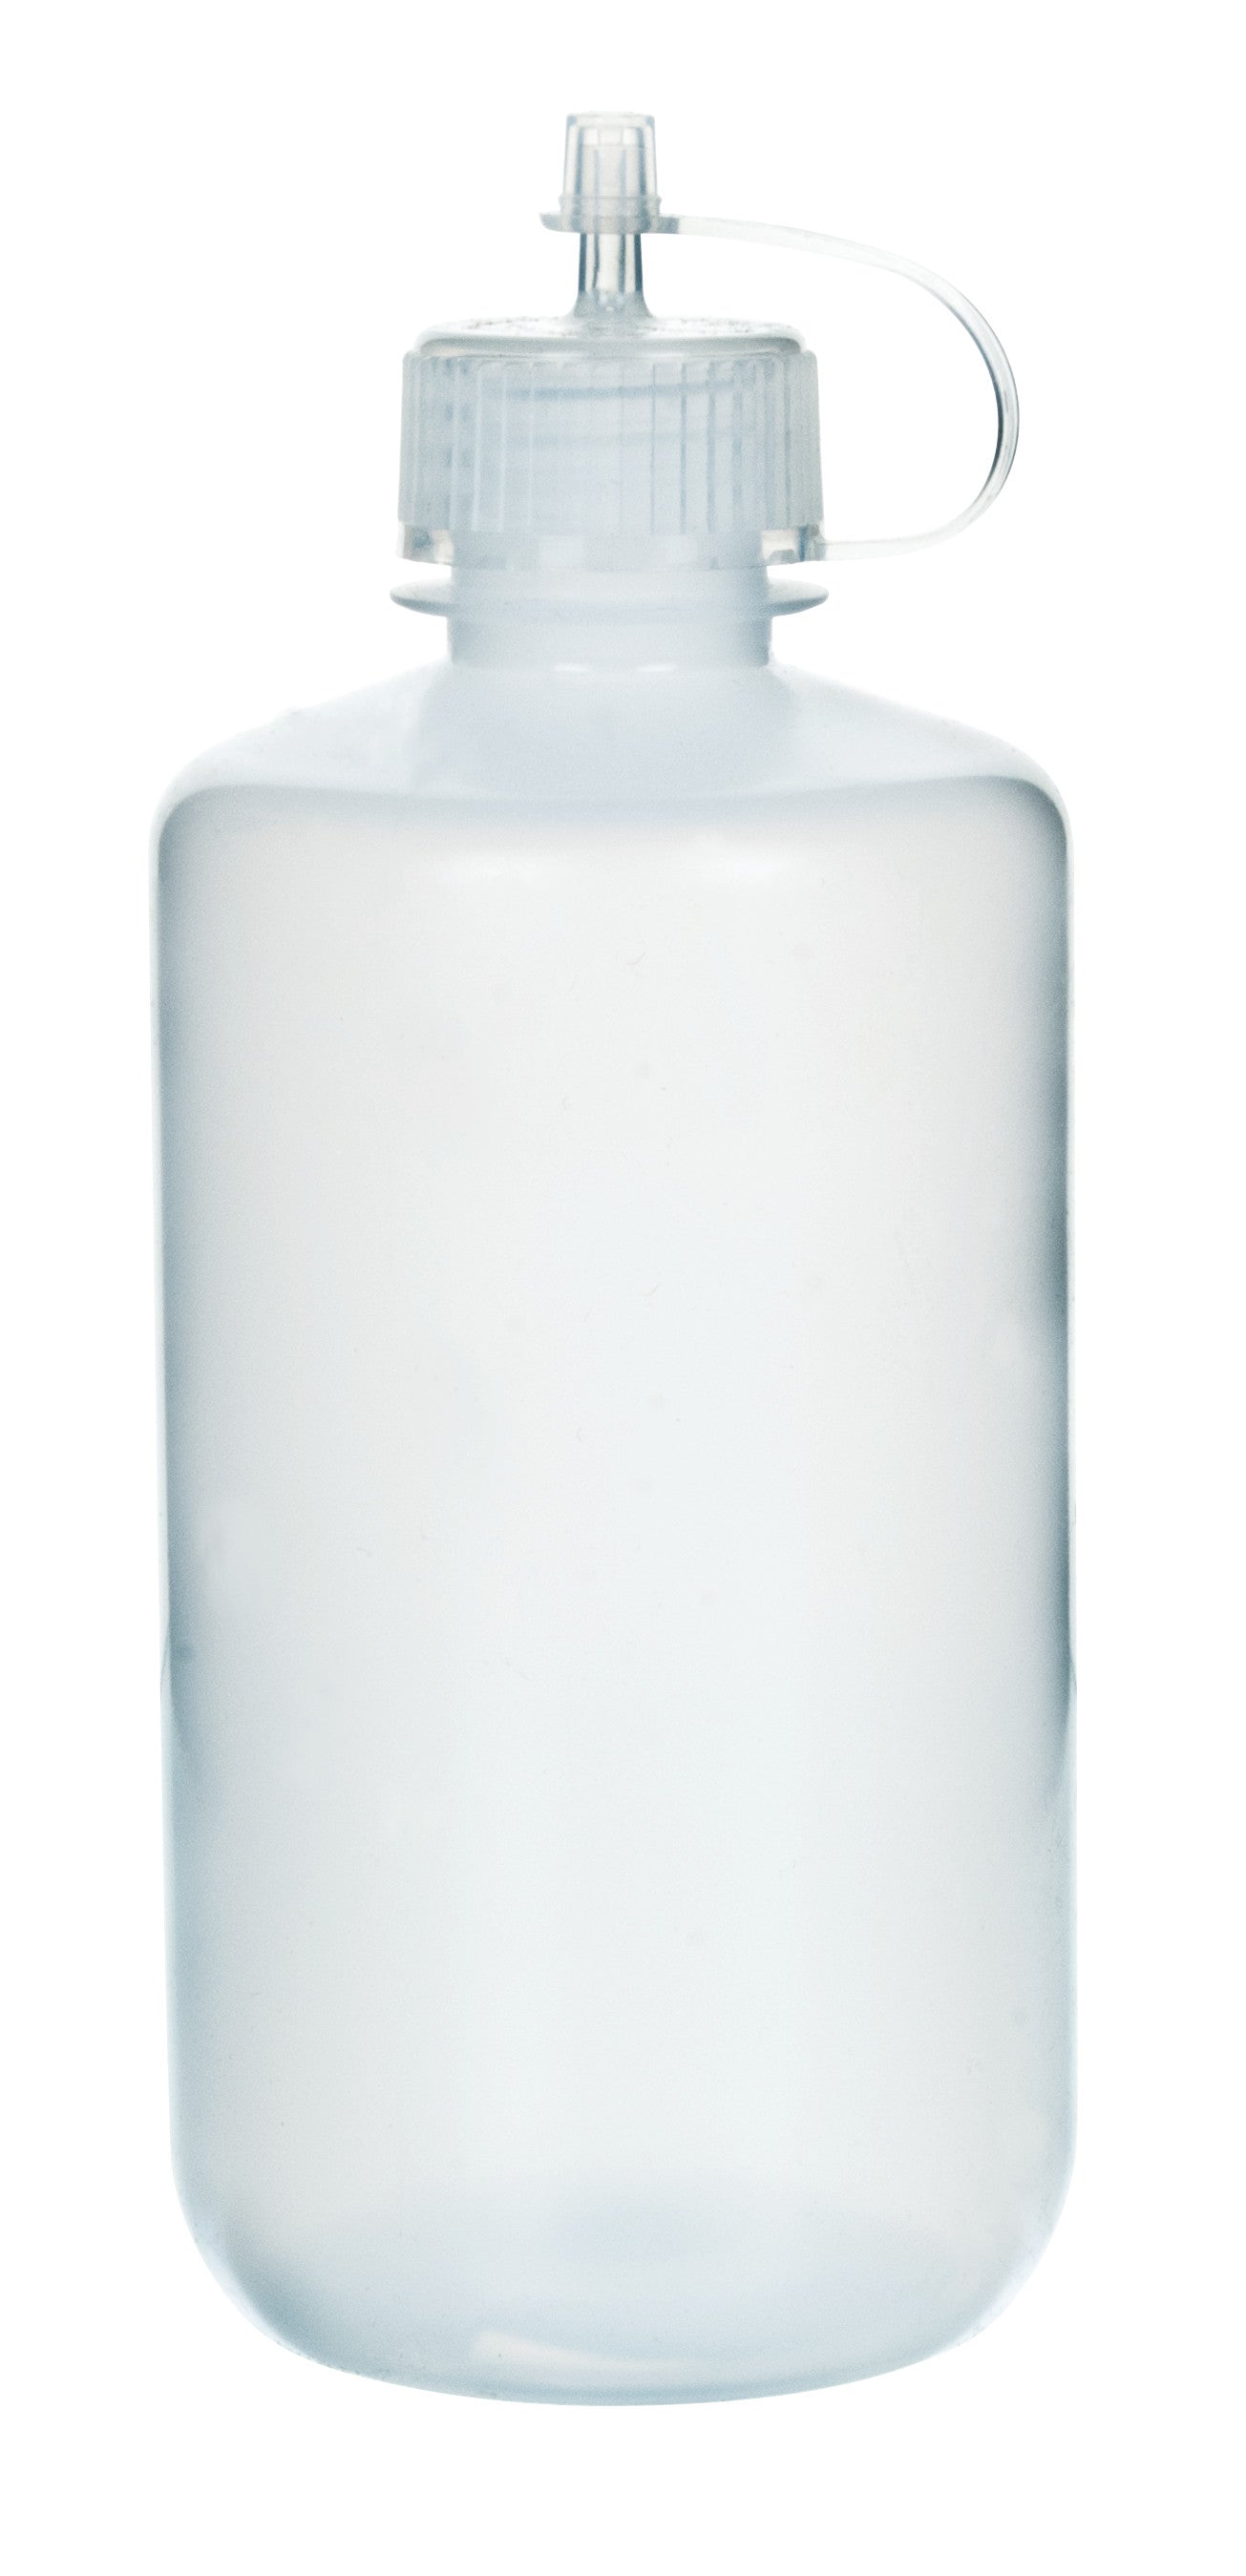 Low Density Polyethylene (LDPE) Plastic Dropping Bottle, 250 ml, Euro Design